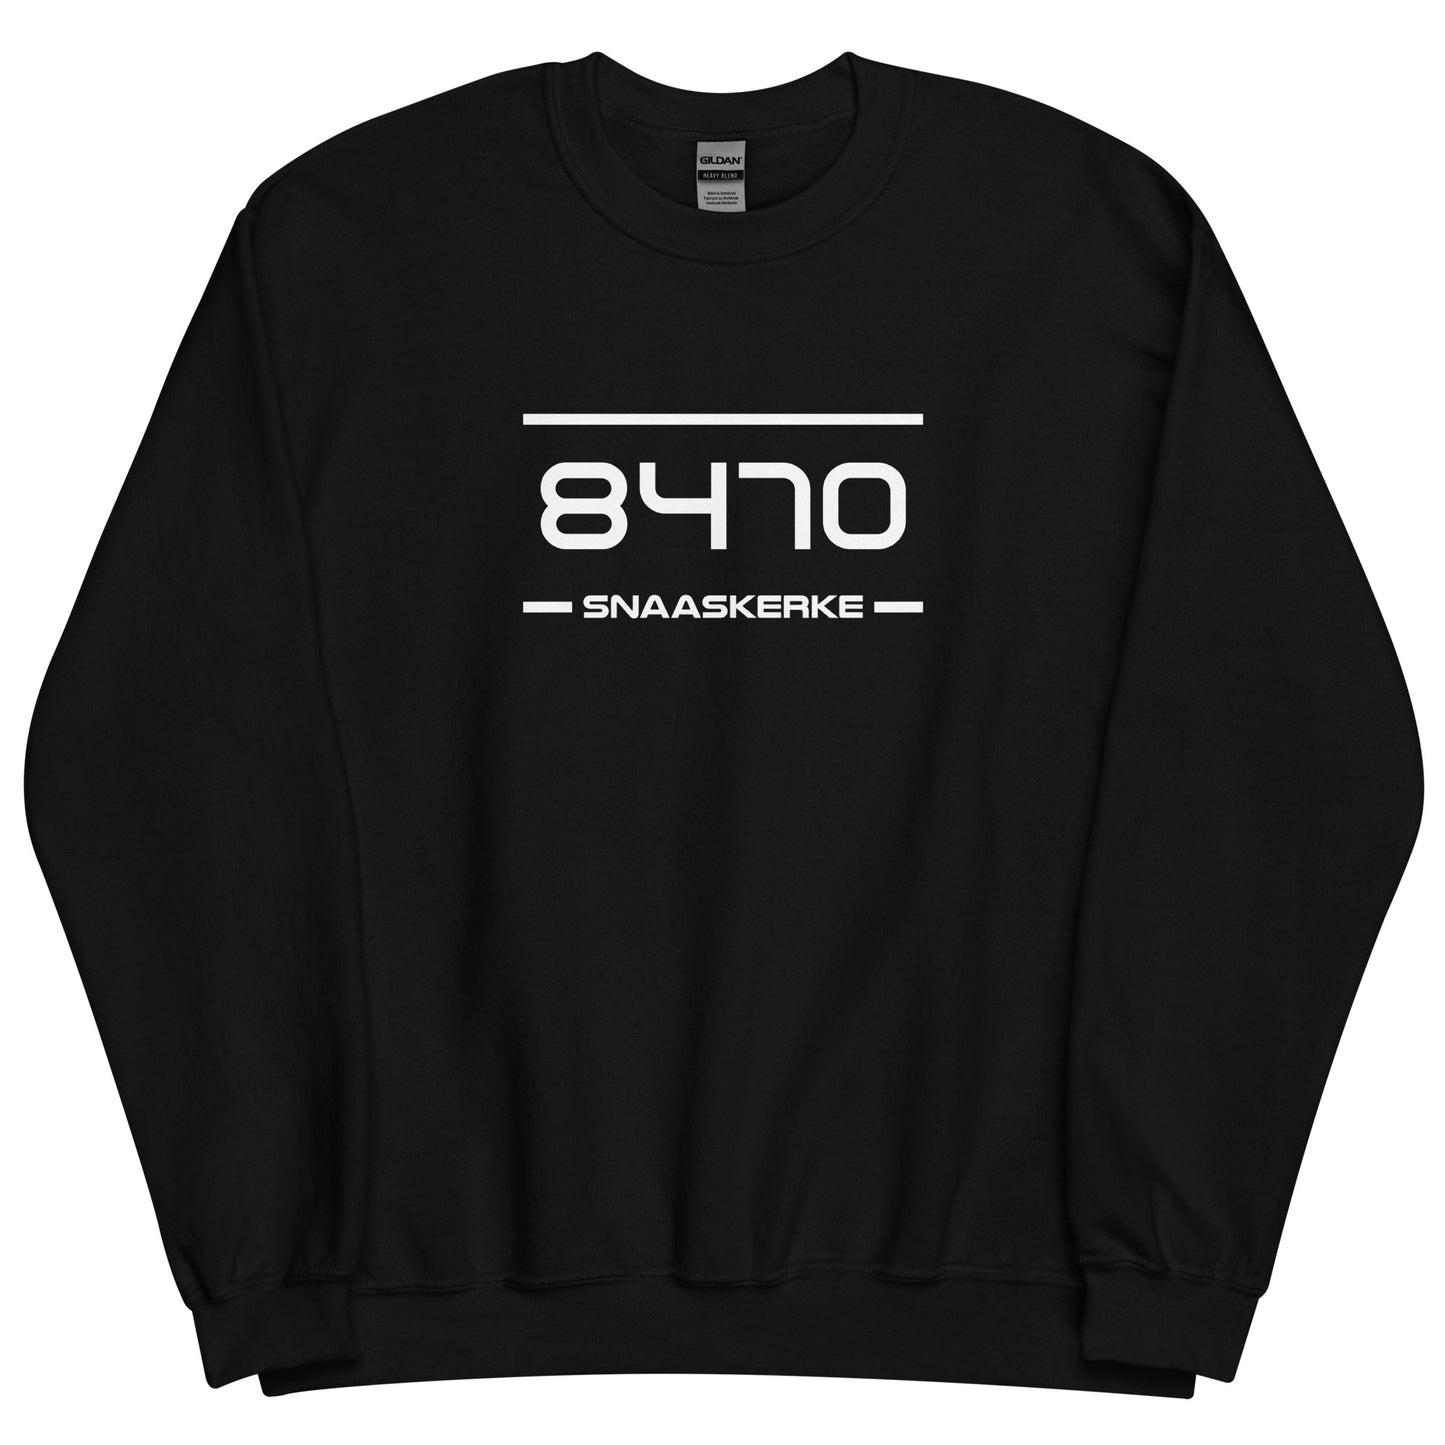 Sweater - 8470 - Snaaskerke (M/V)